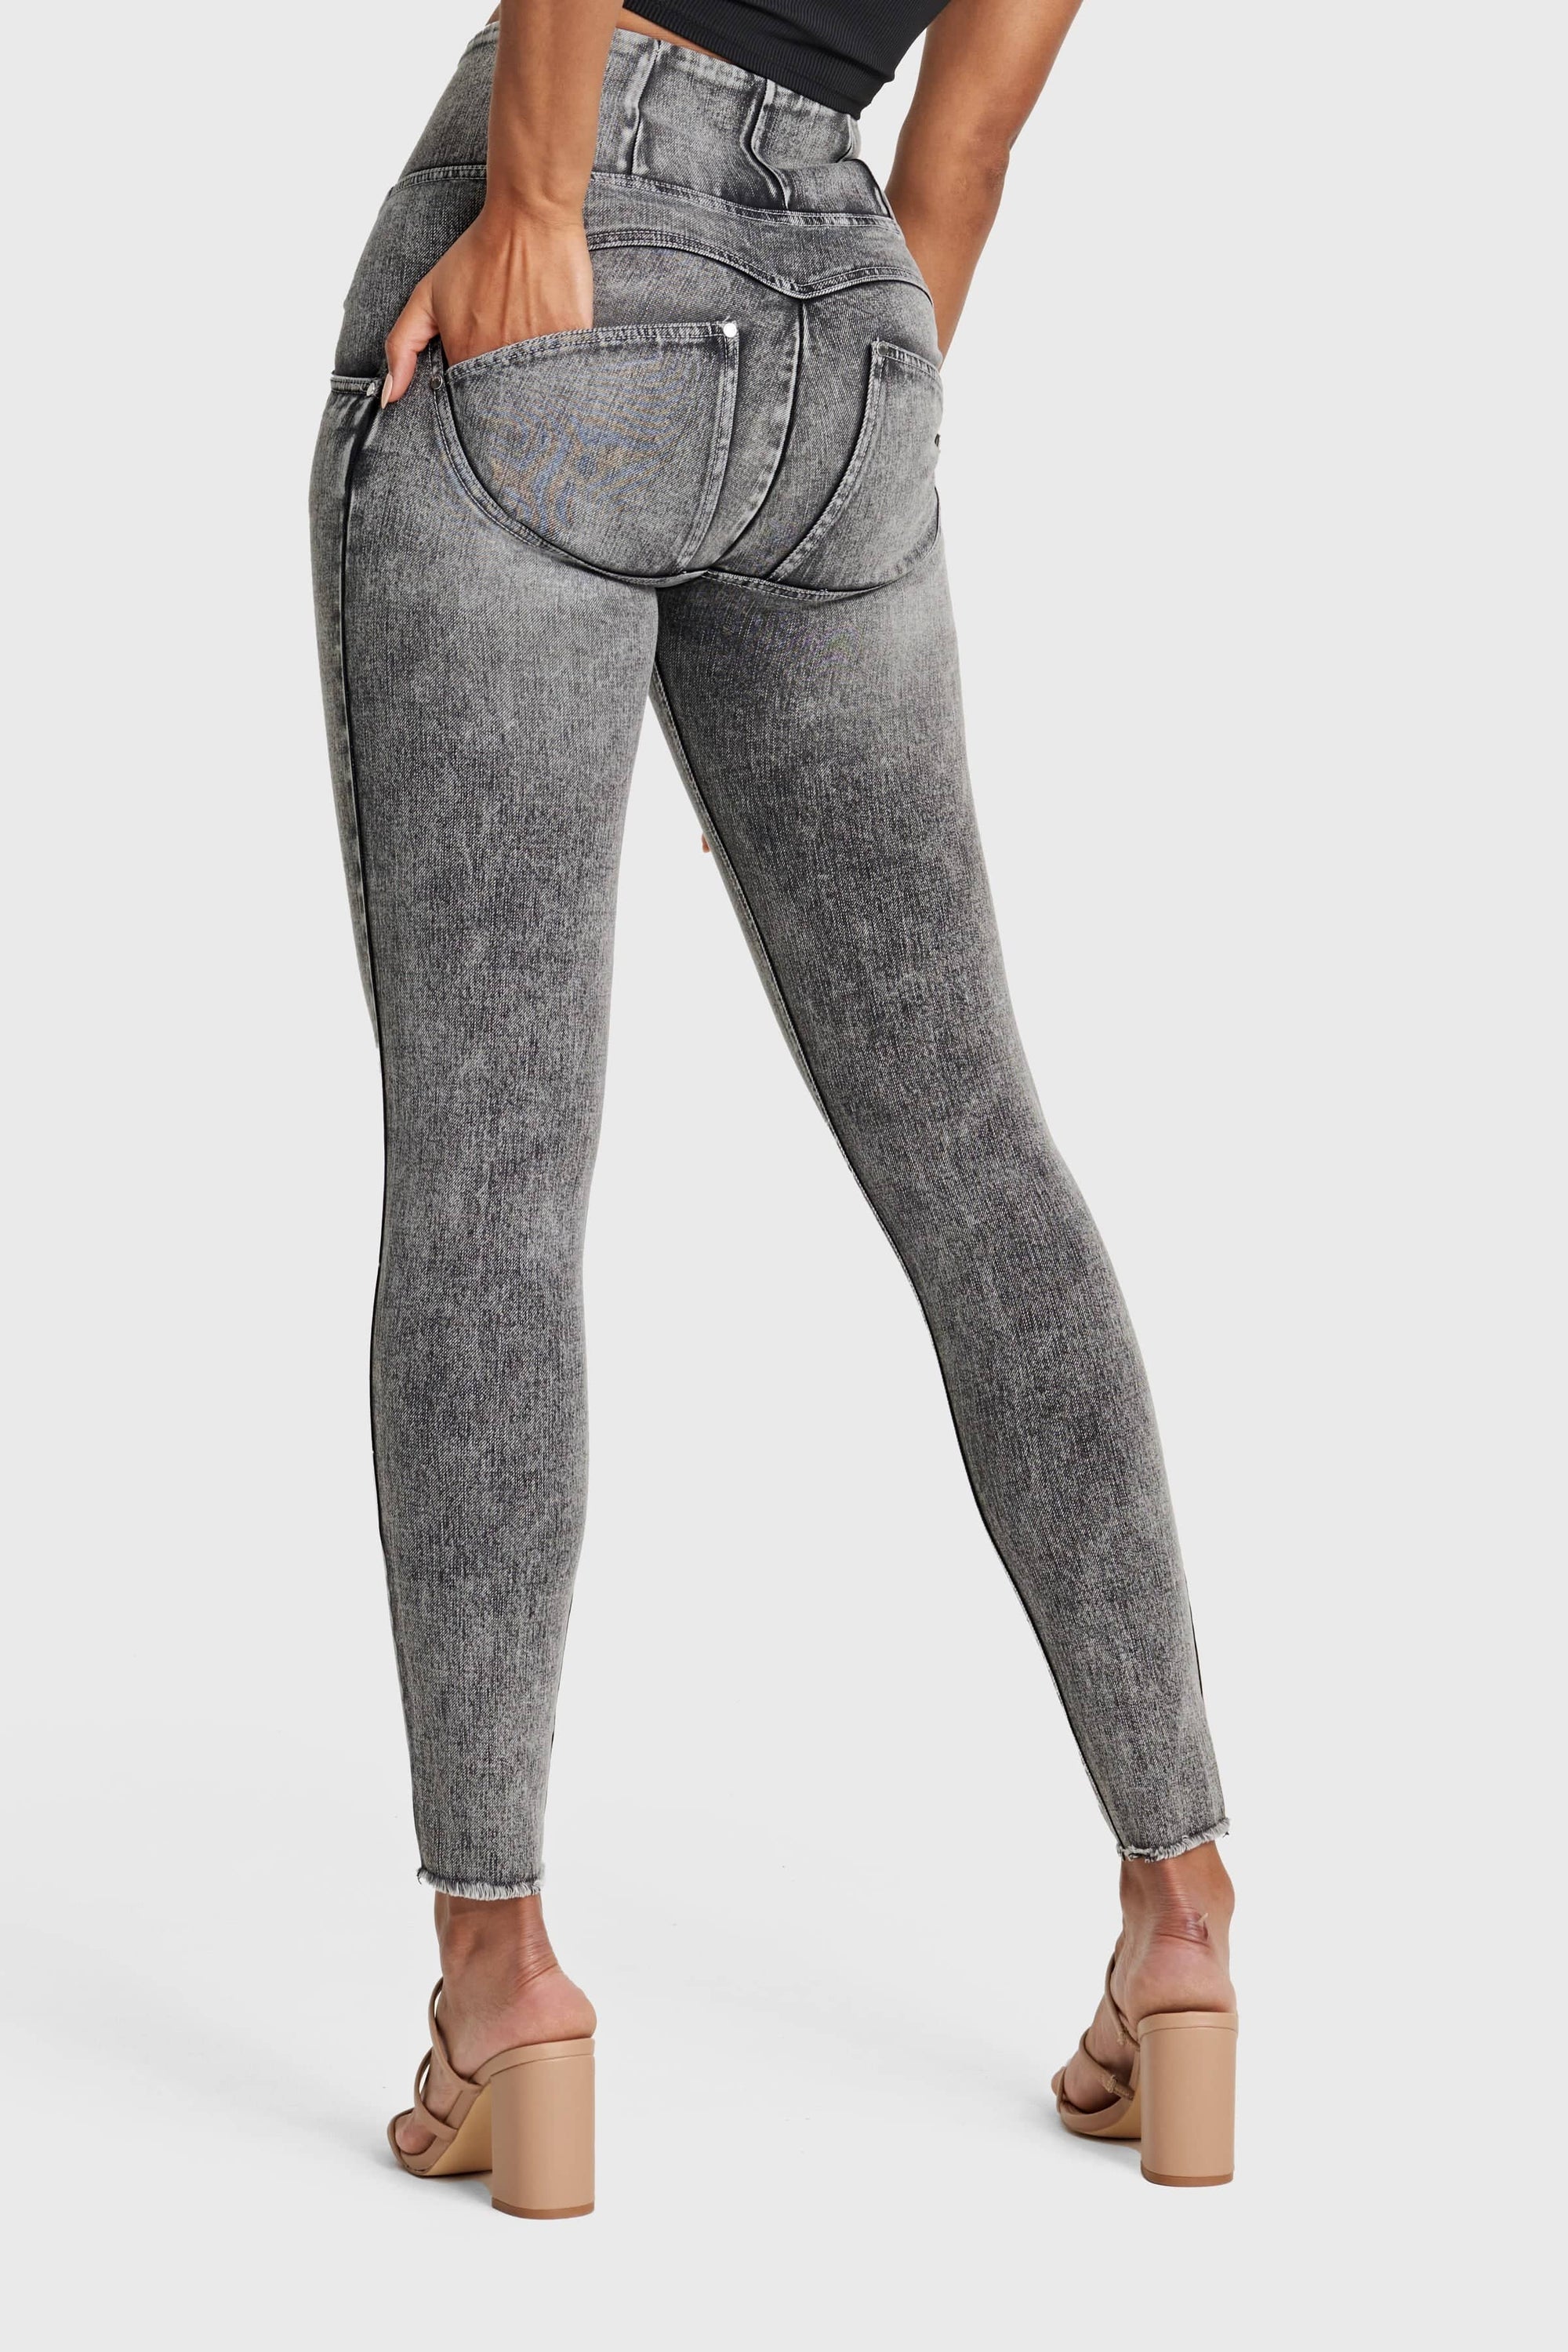 WR.UP® Snug Ripped Jeans - High Waisted - Full Length - Grey Stonewash + Grey Stitching 6